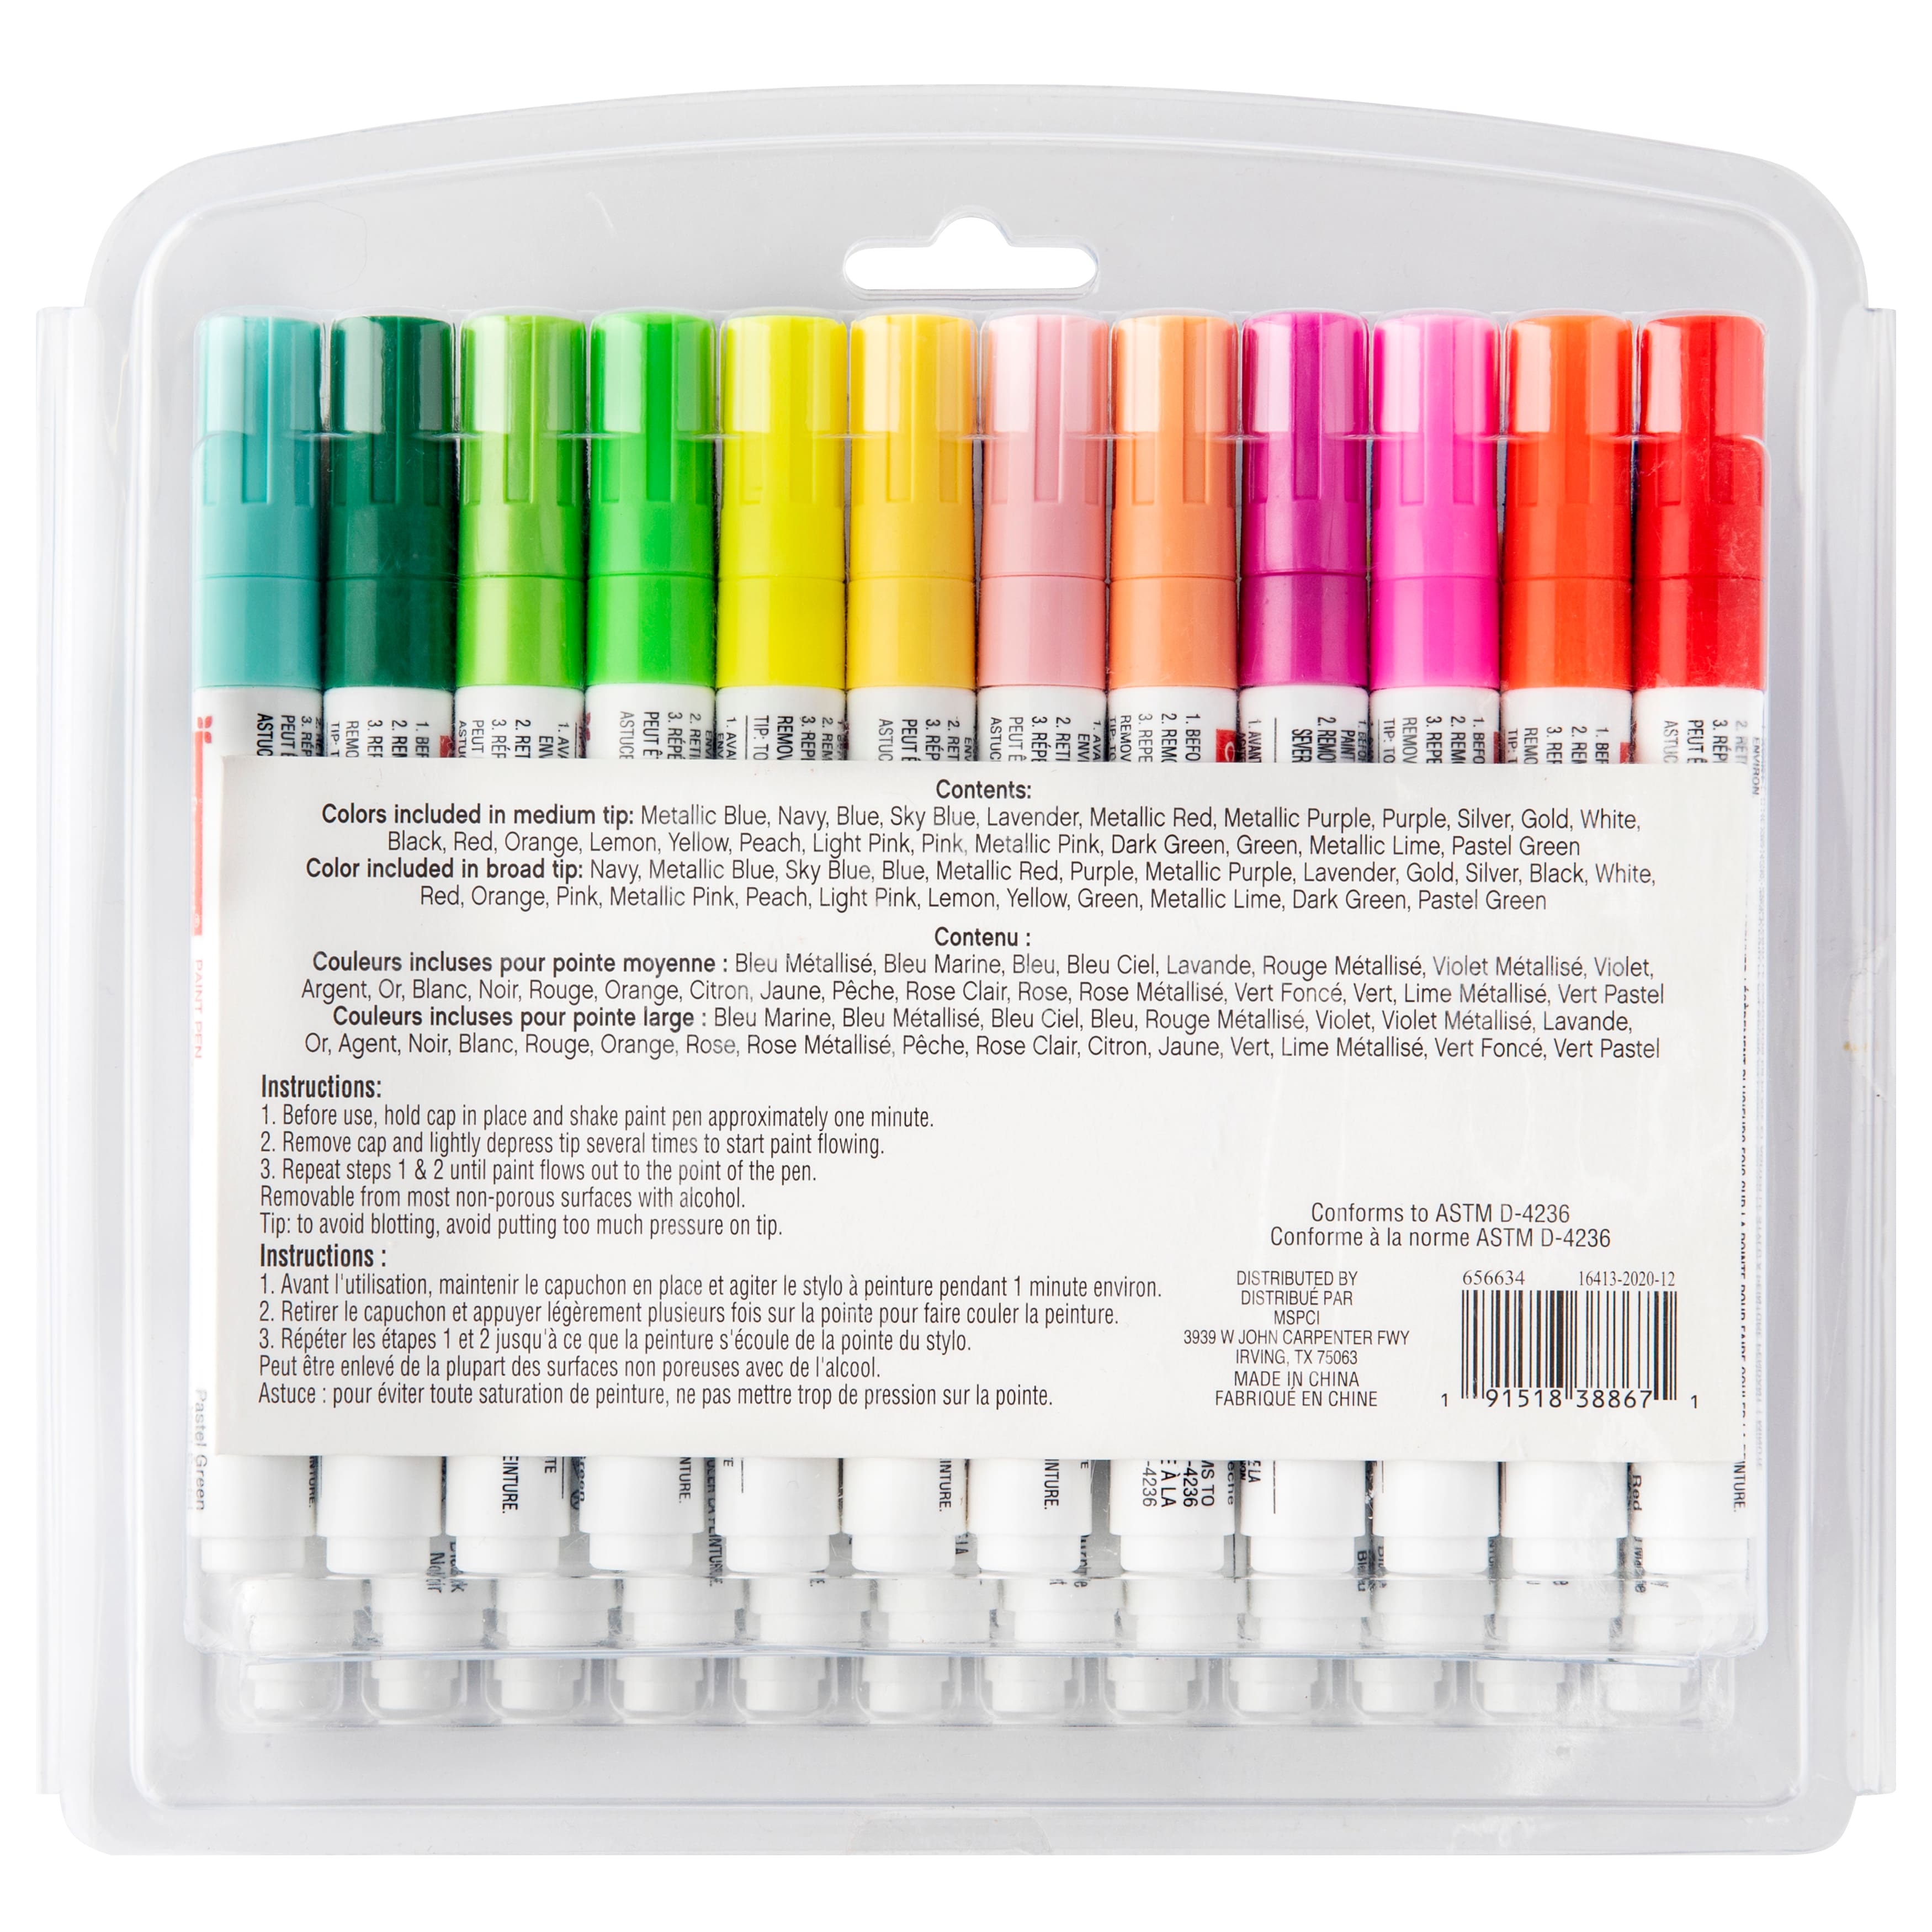 Elmer's E642 3D Washable Paint Pens 5 Pack (Pack of 6)